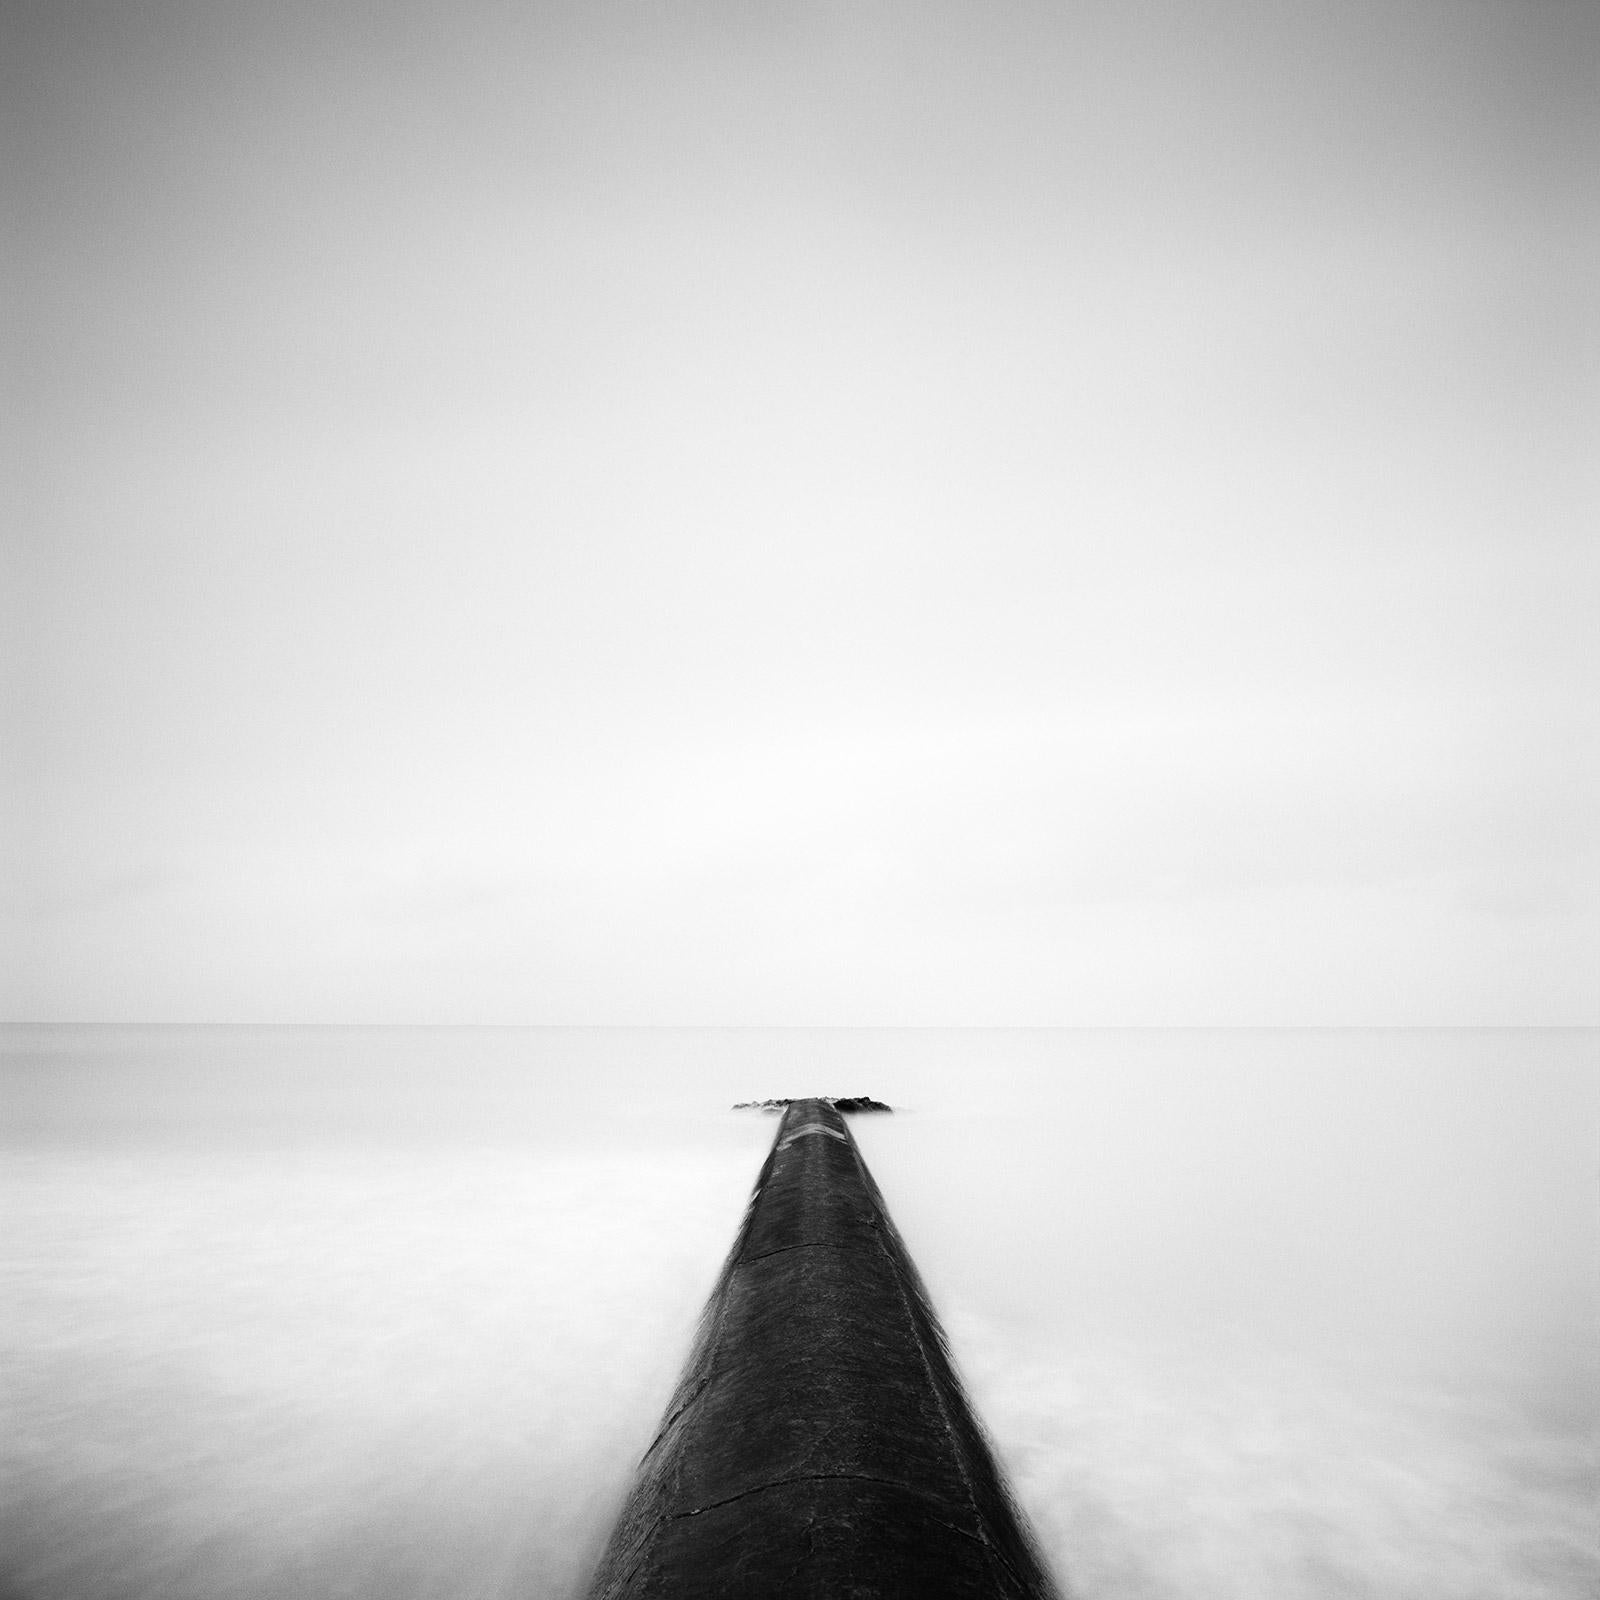 Gerald Berghammer Landscape Photograph - Straight on, Pier, Ozean, Normandie, France, black white photography, landscape